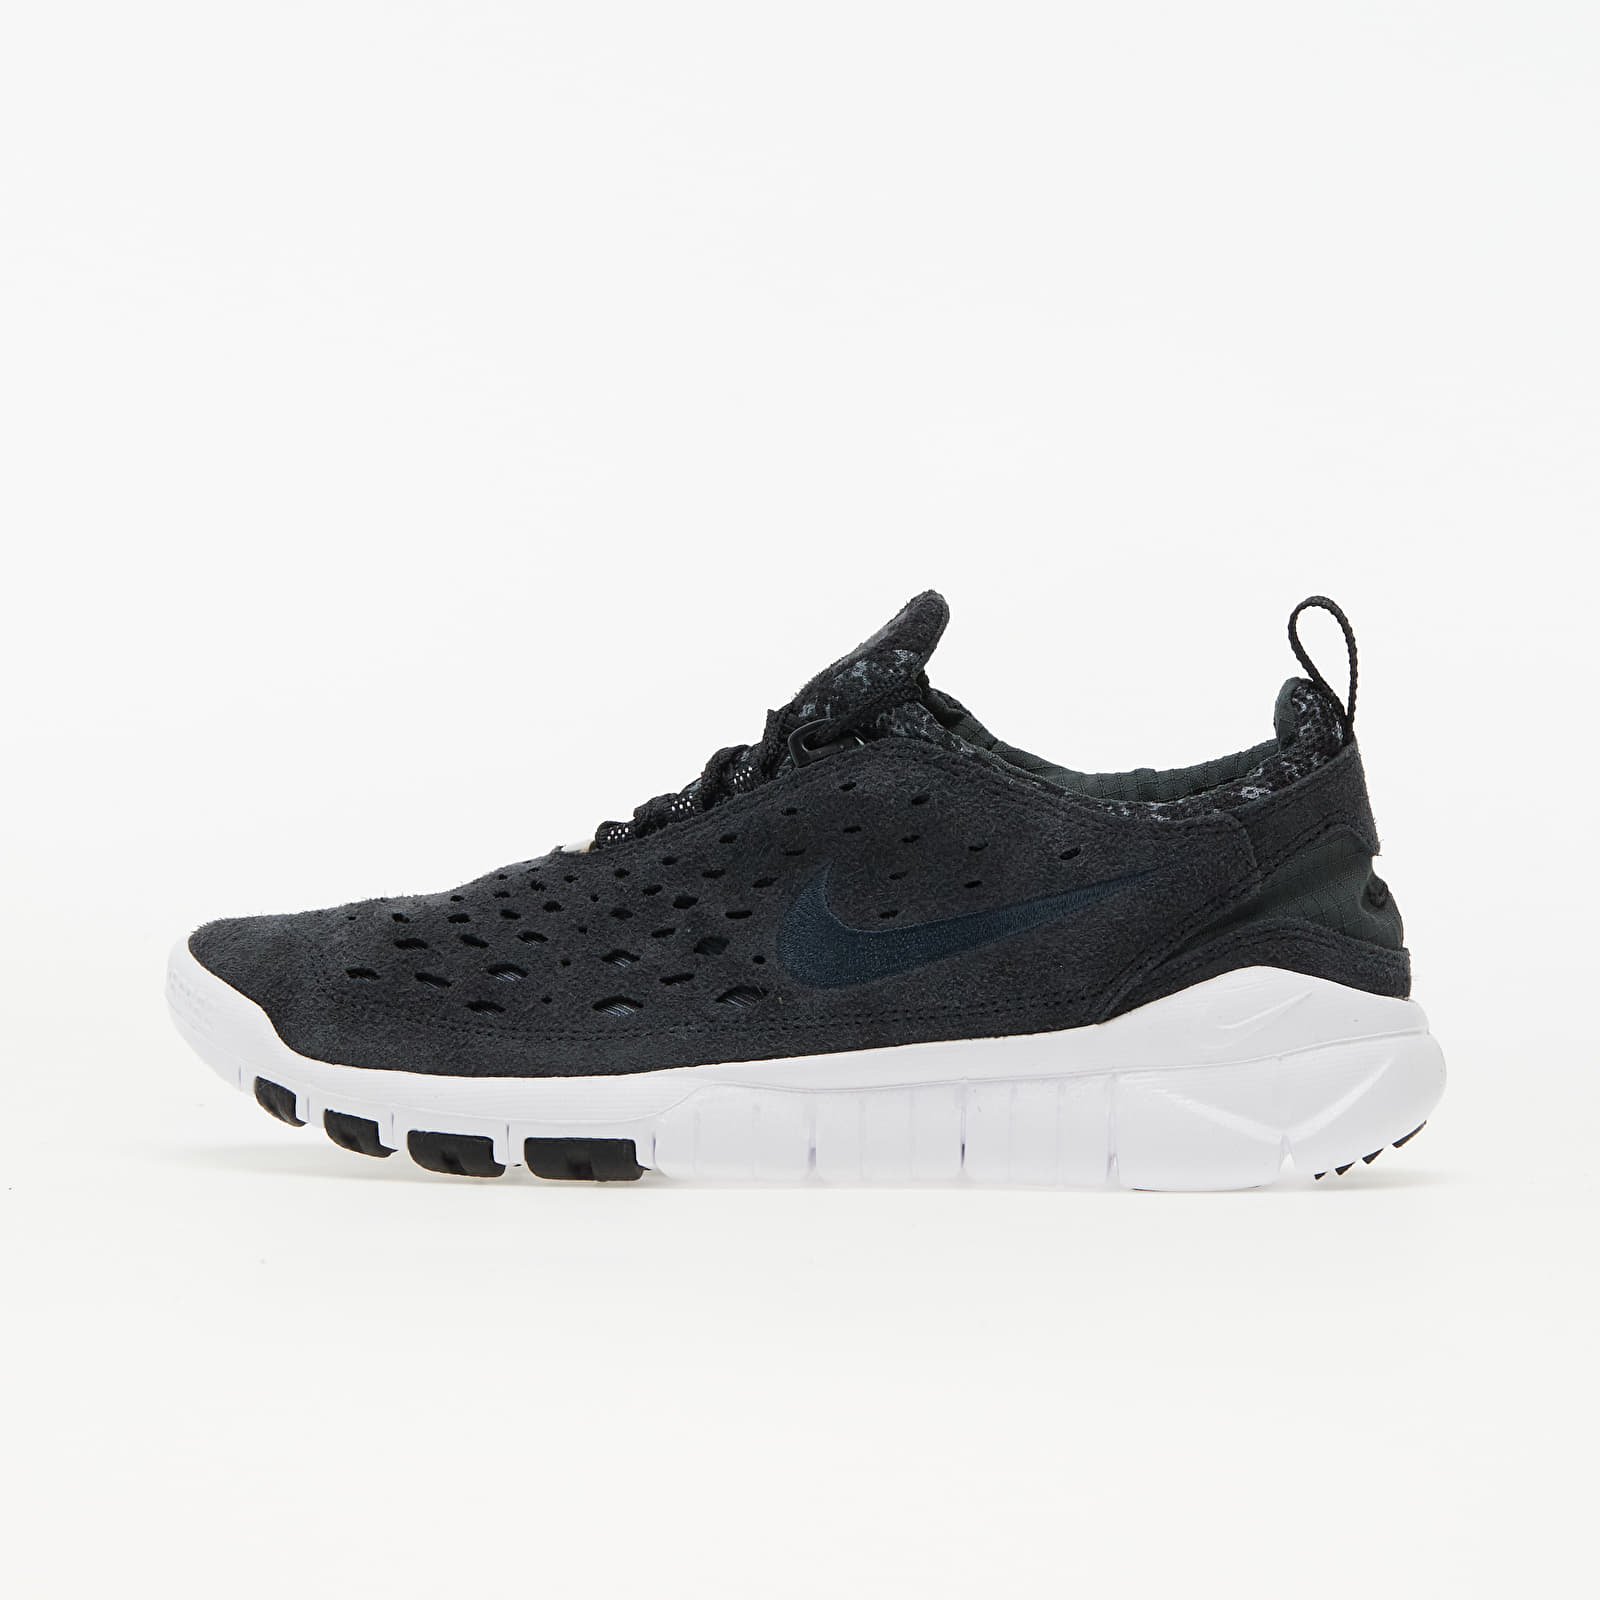 Men's shoes Nike Free Run Trail Black/ Anthracite-White